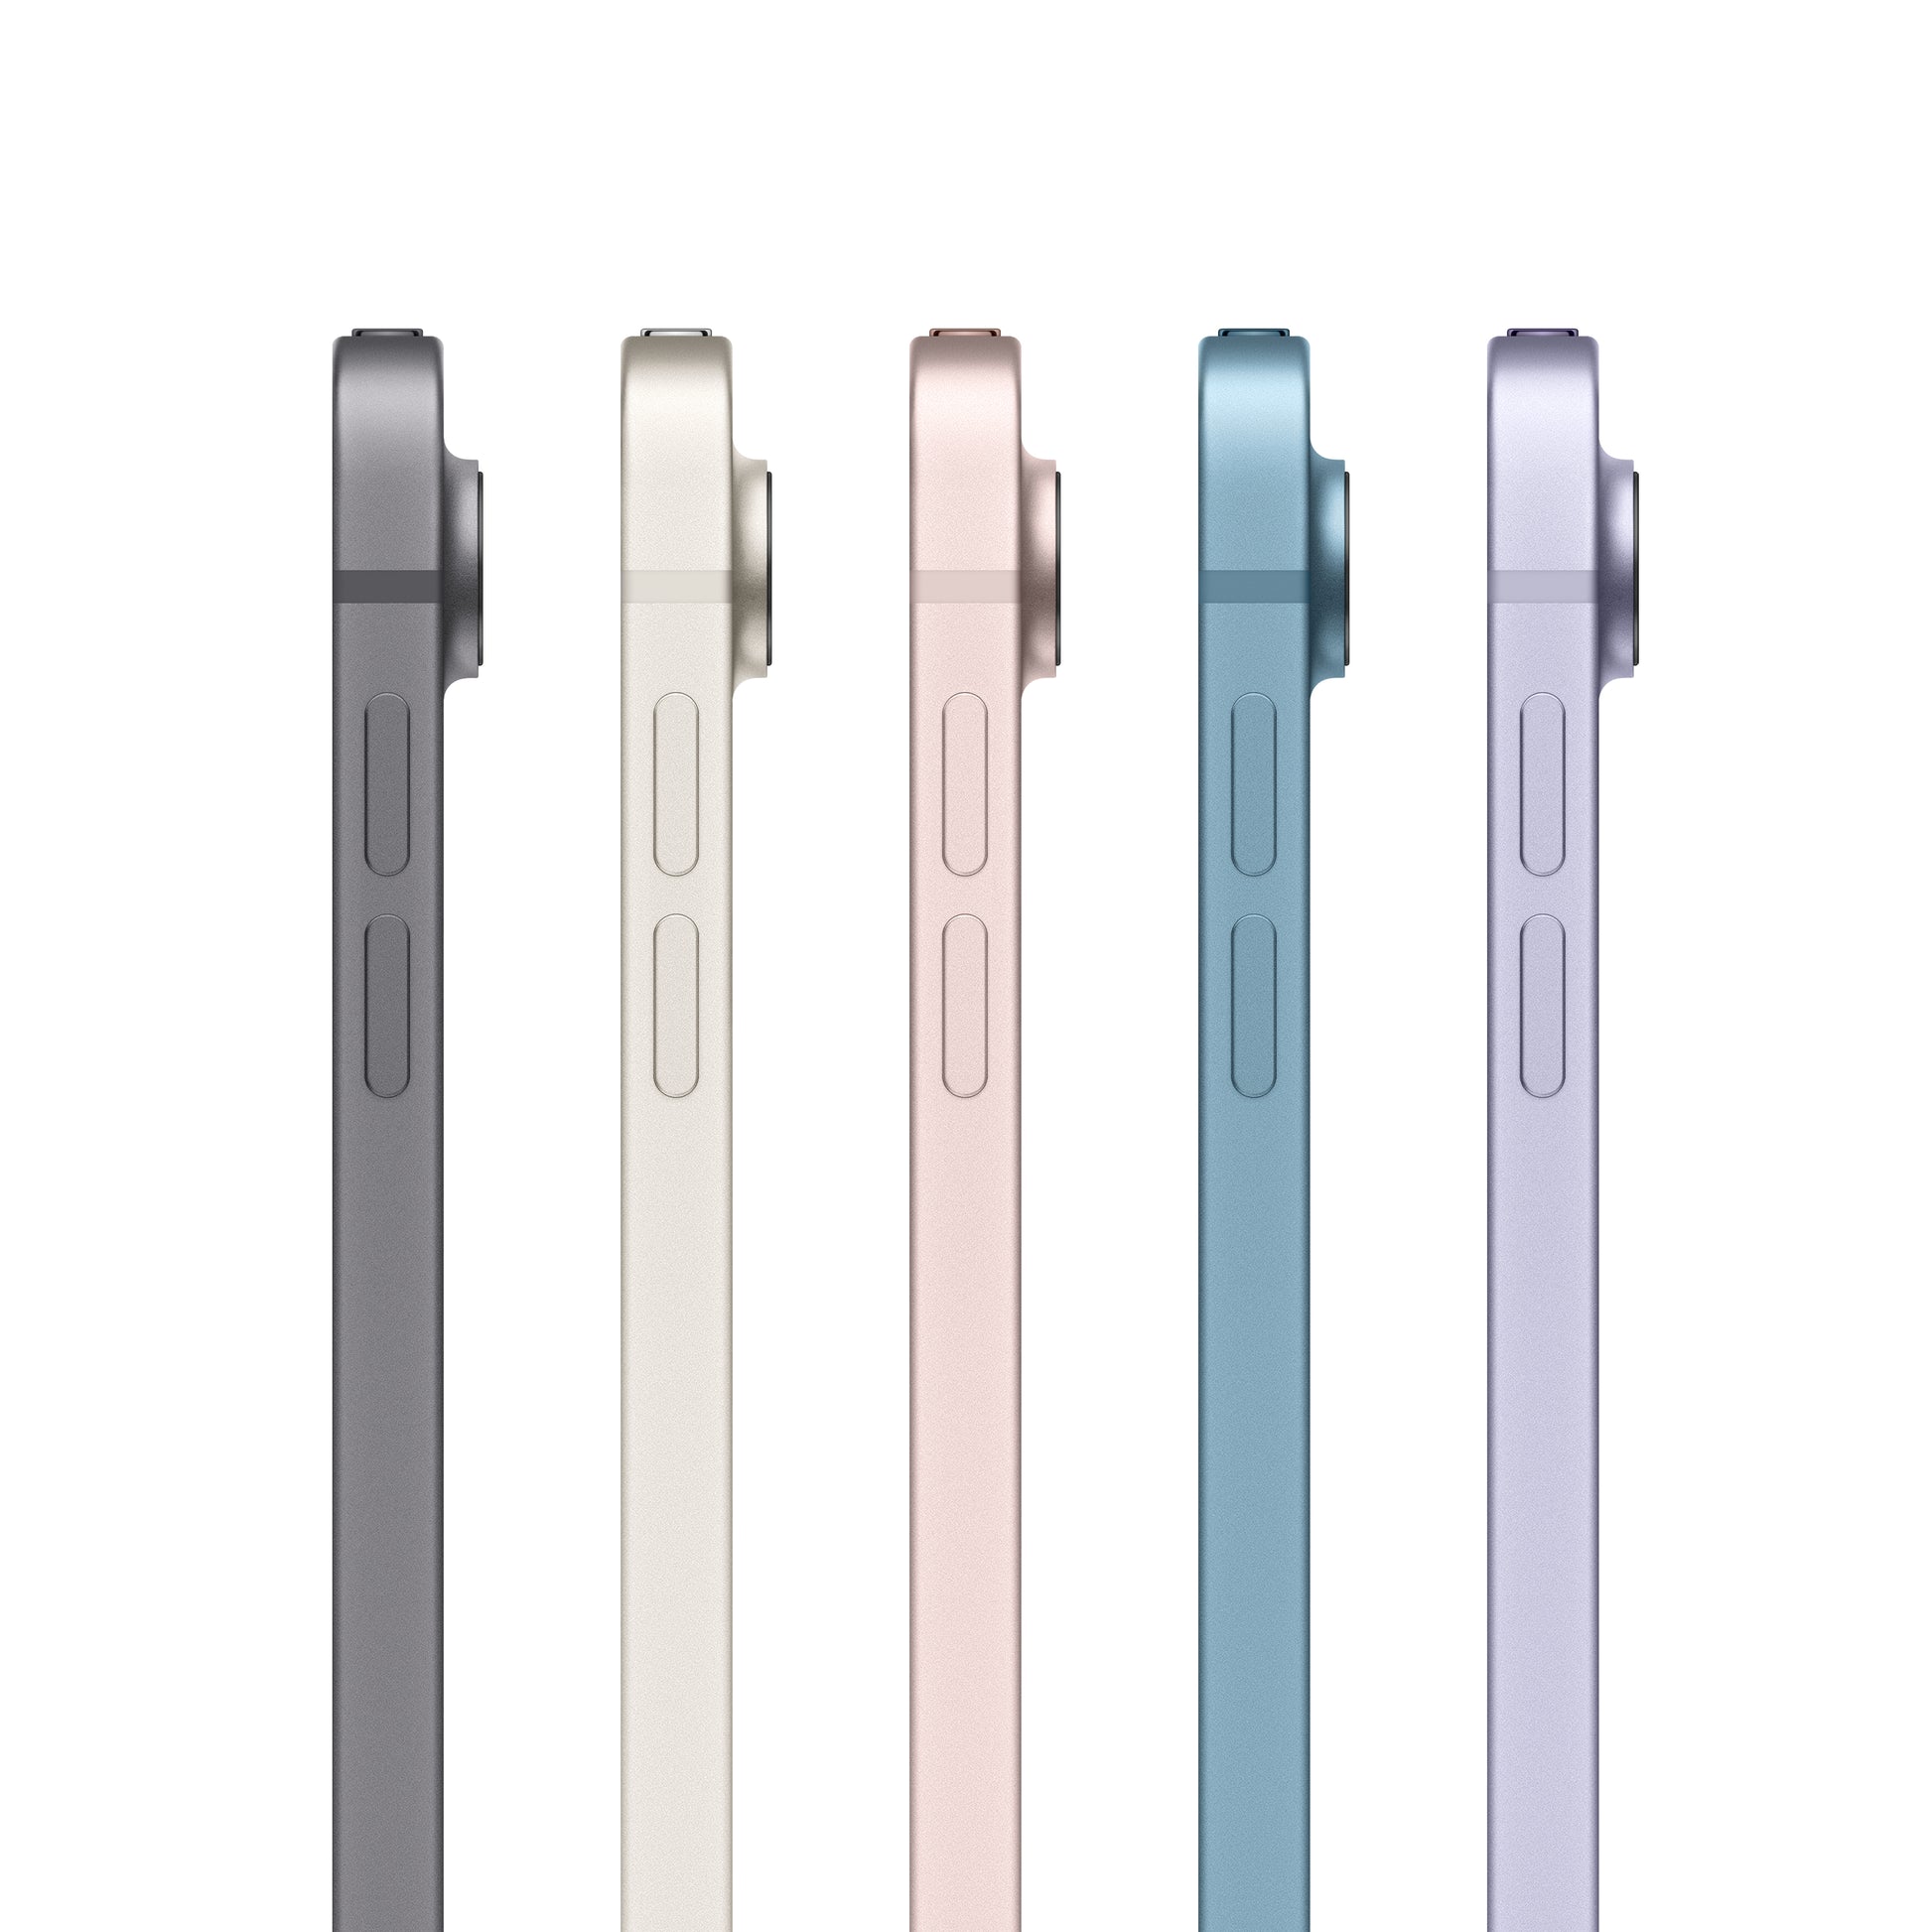 Apple iPad Air | M1 | Space Grey